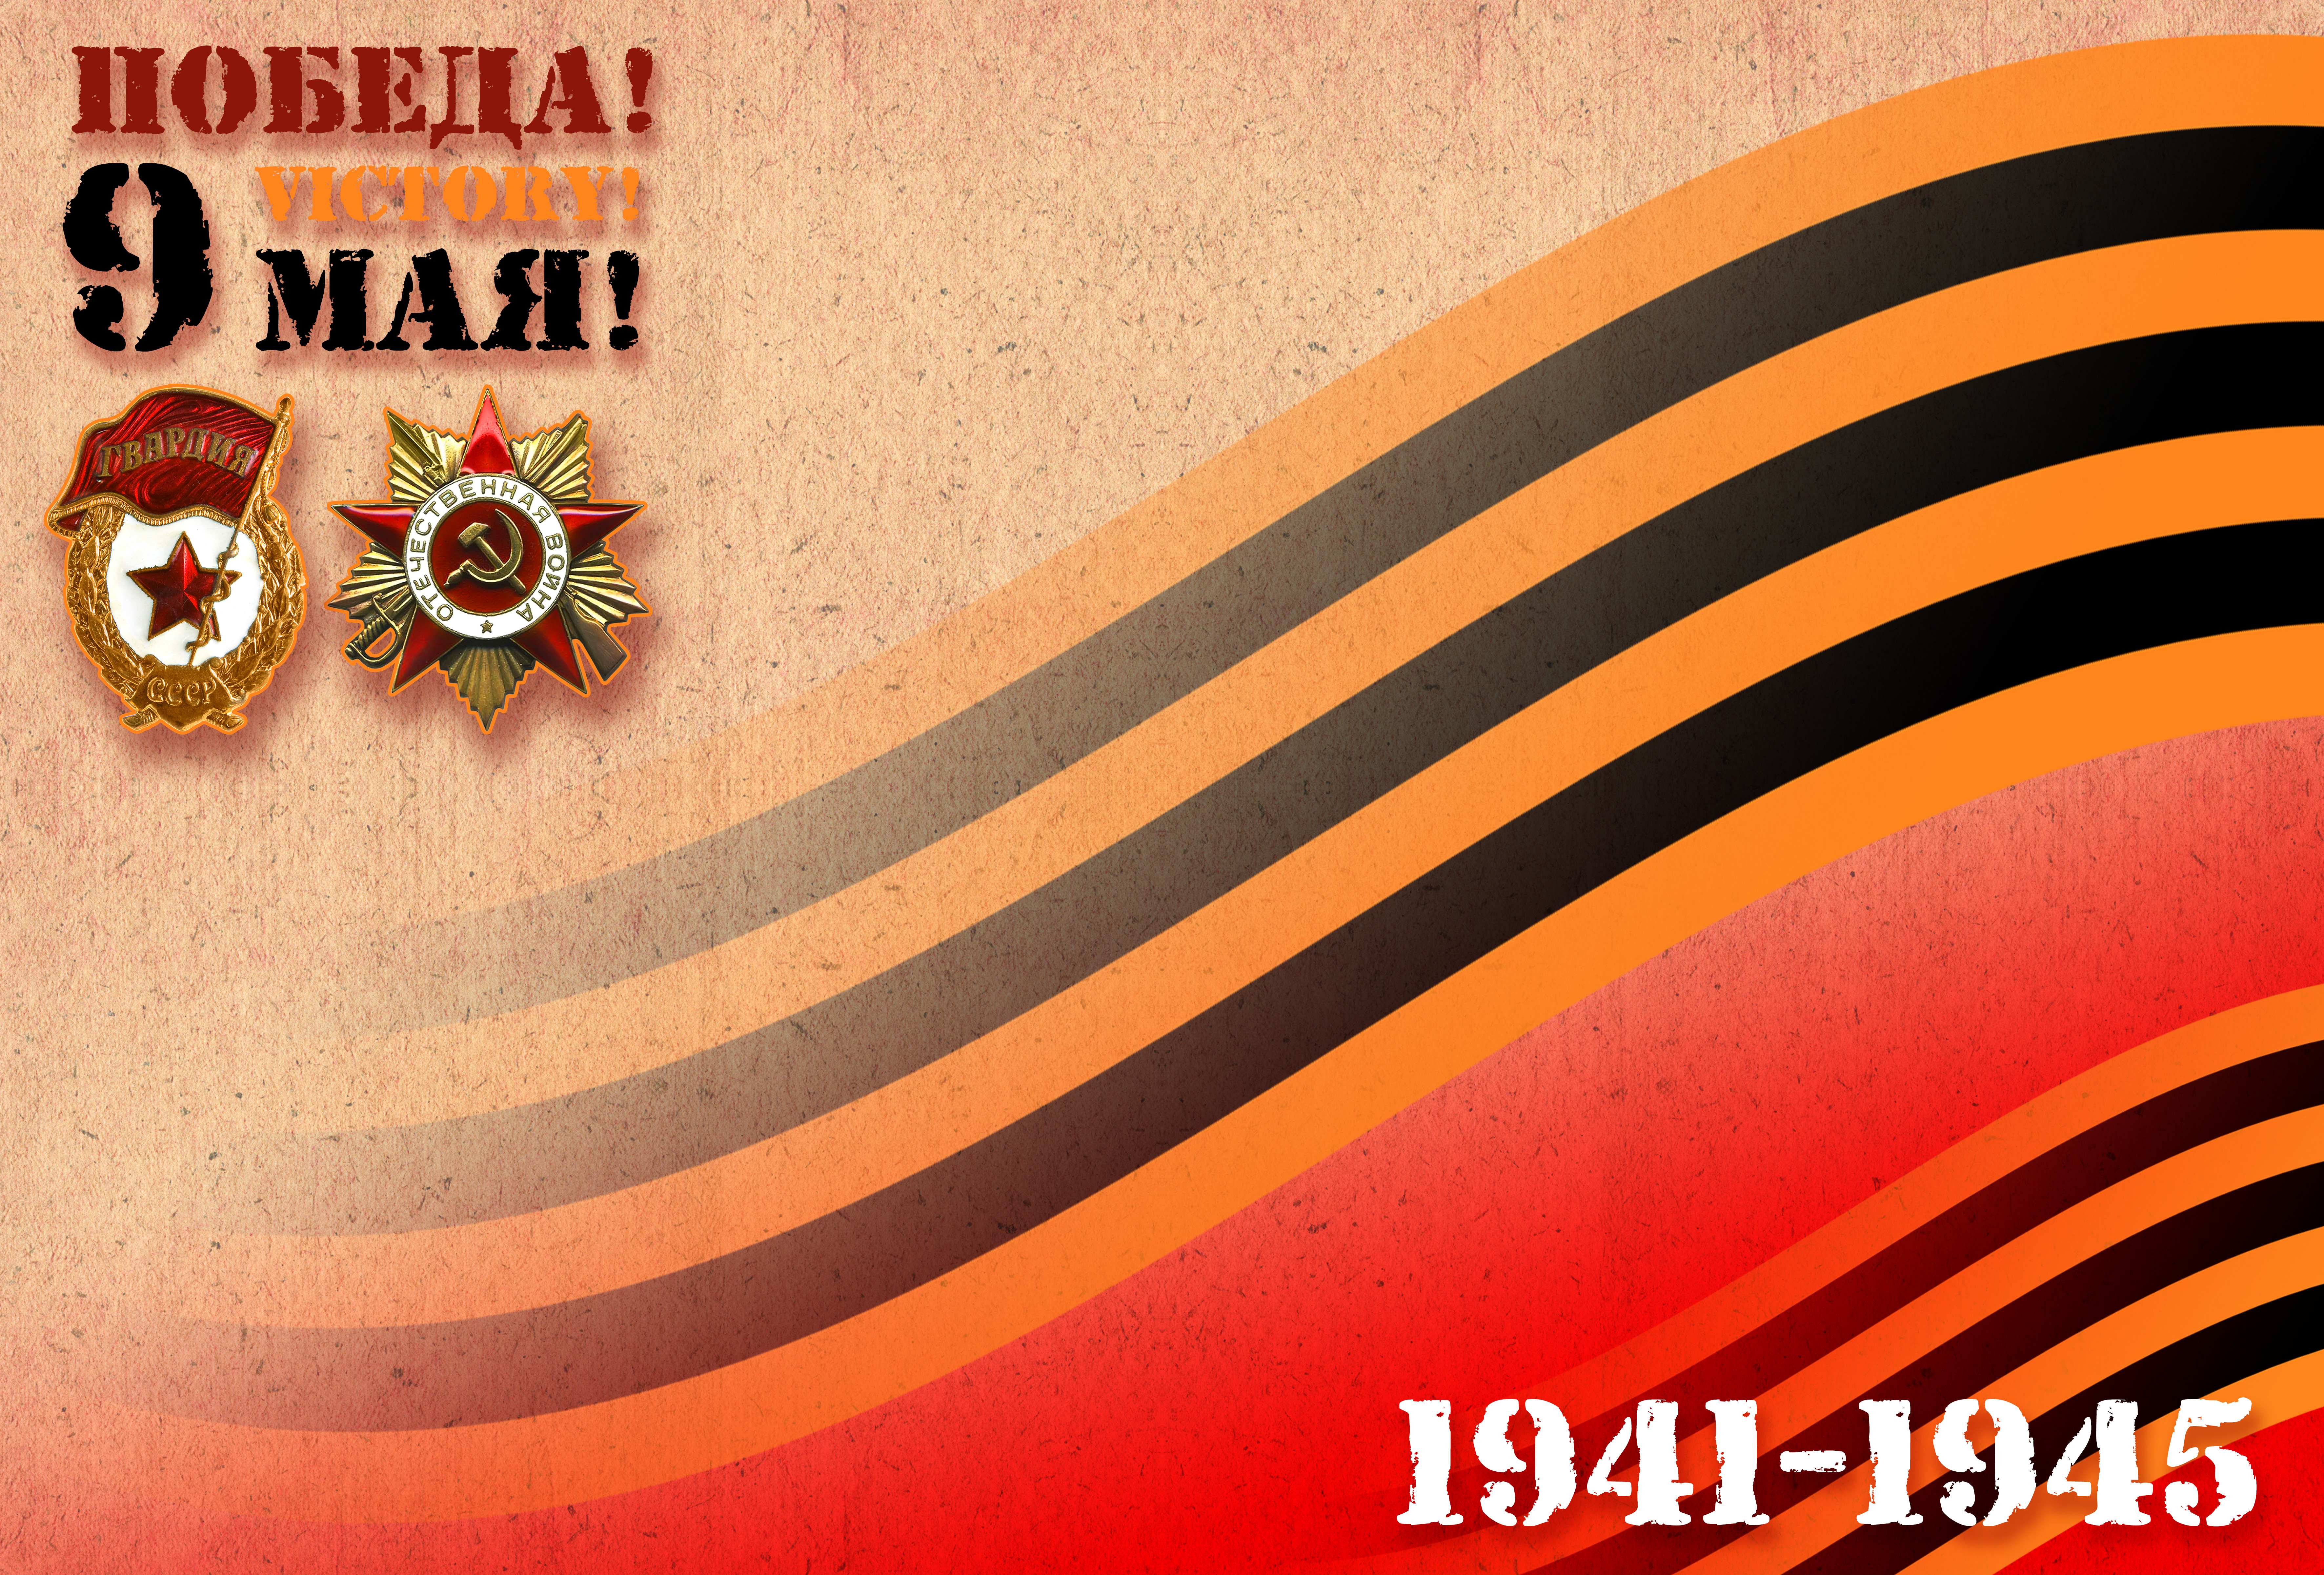 Soviet poster - 9 may 1945 photo